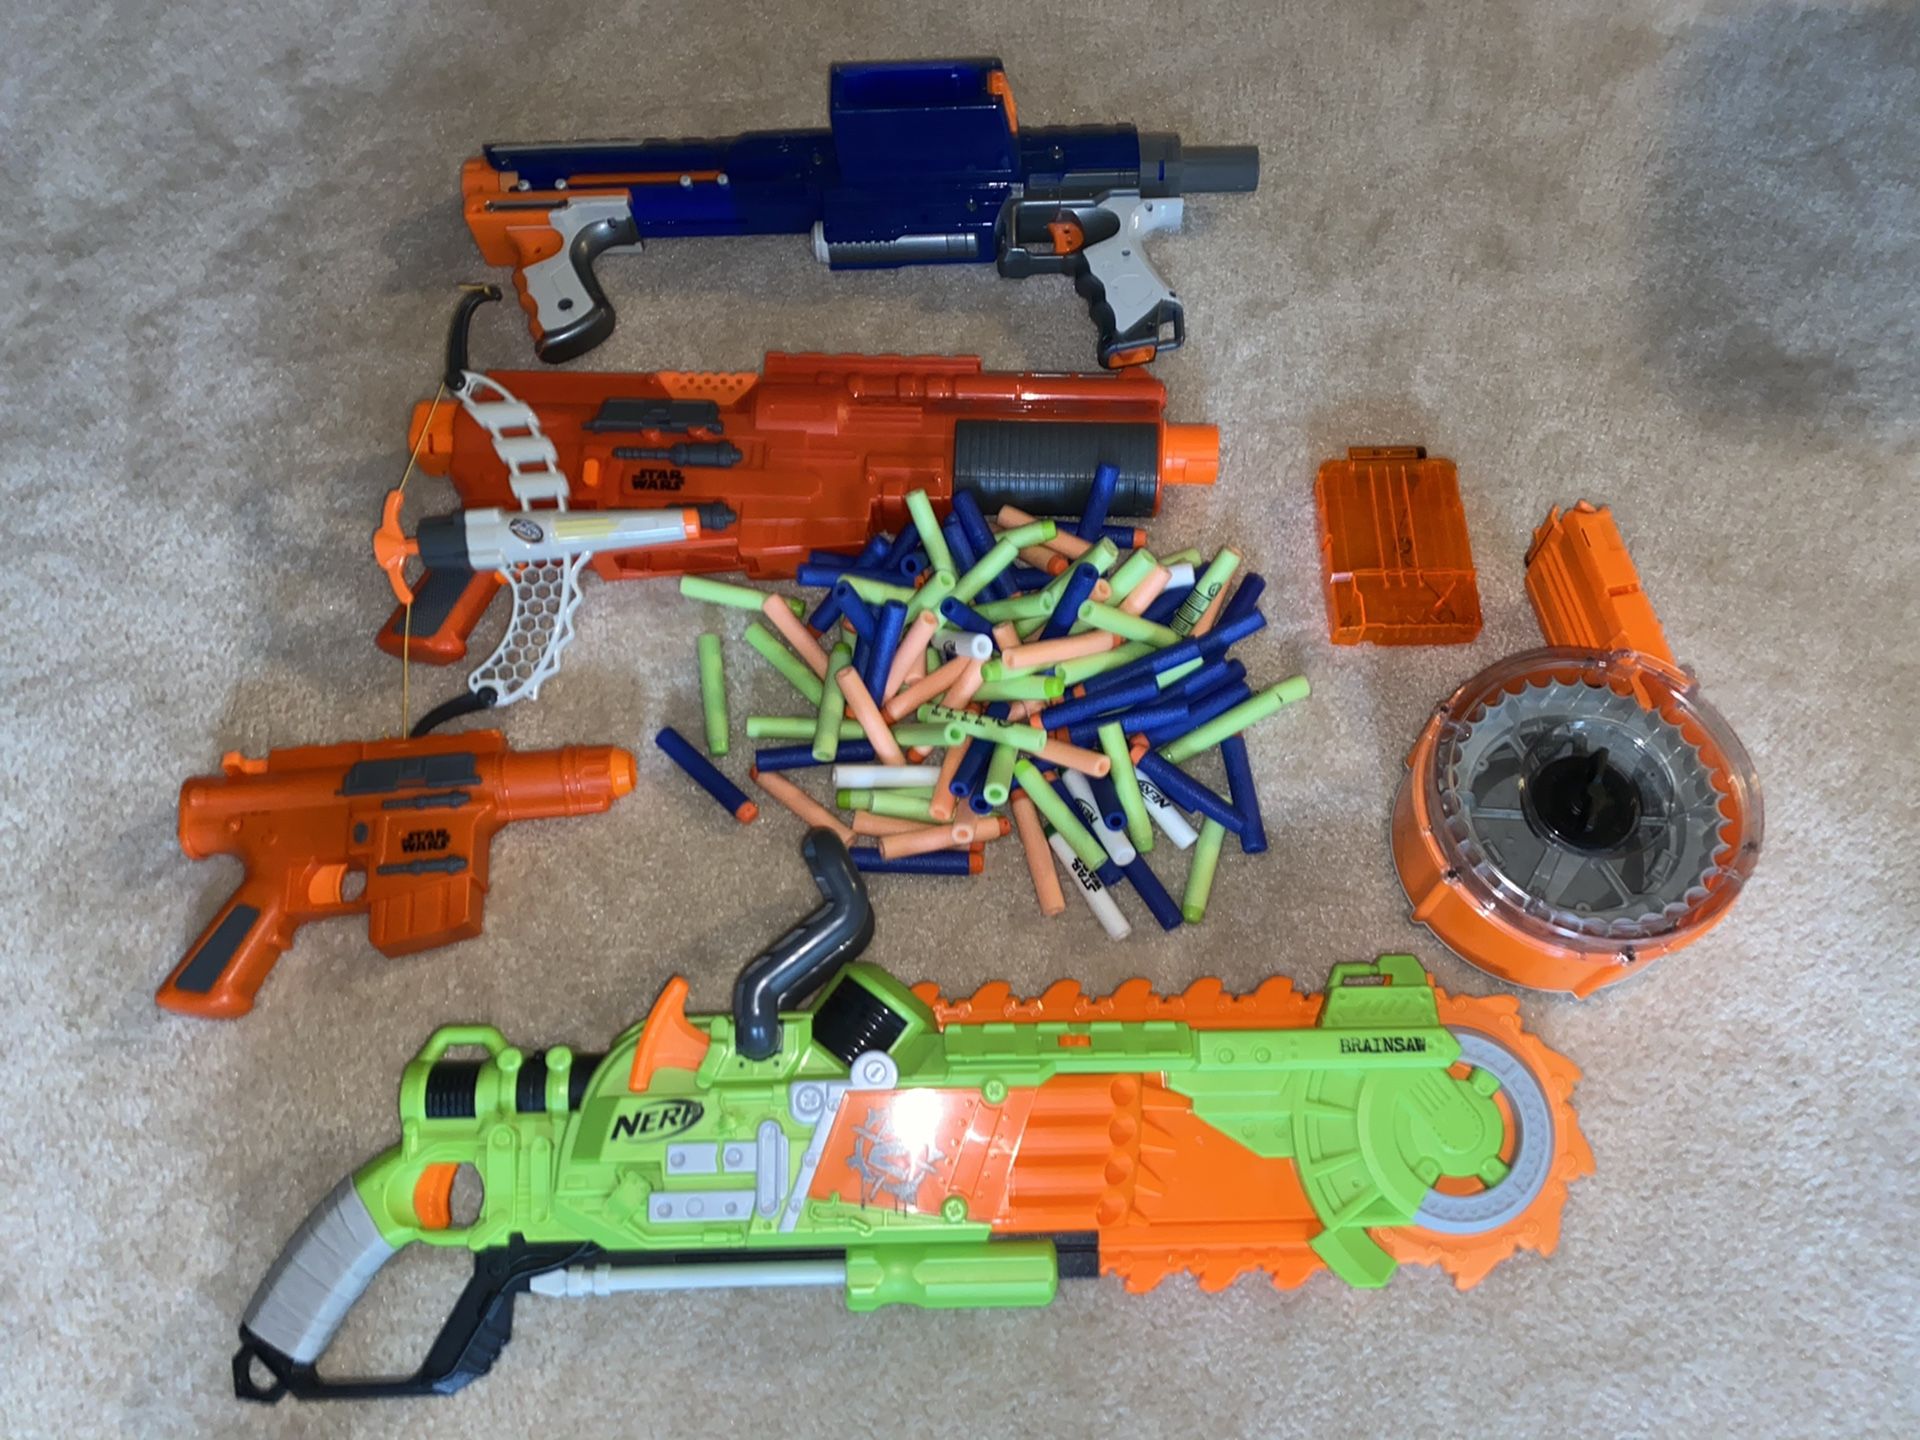 5 Nerf Guns Set, 2 Limited Edition Star Wars Guns, 1 Air Zone Gun, 1 Zombie Gun, 1 Normal Gun, 2 Mags, 100+ Bullets, For Kids, $250 Value